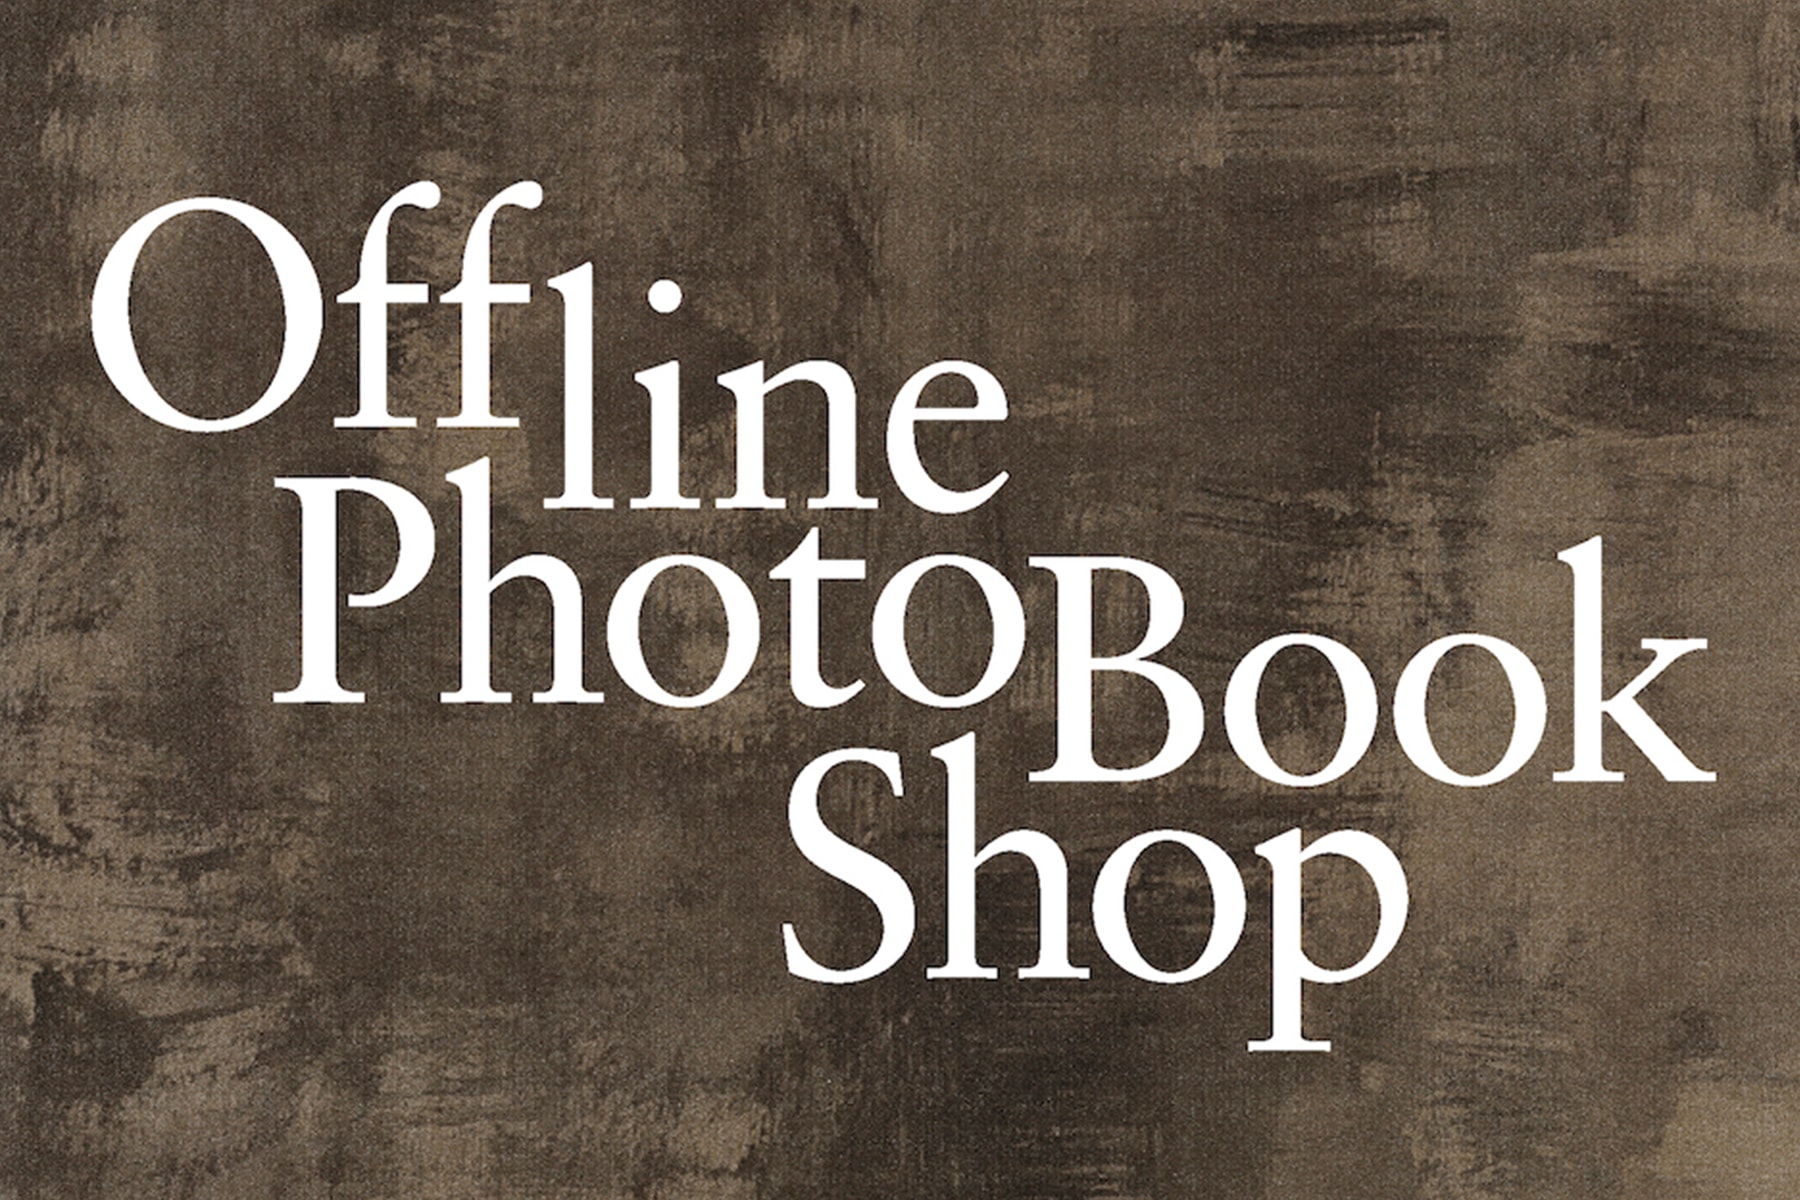 twelvebooks  flotsam books Offline PhotoBook Shop 2